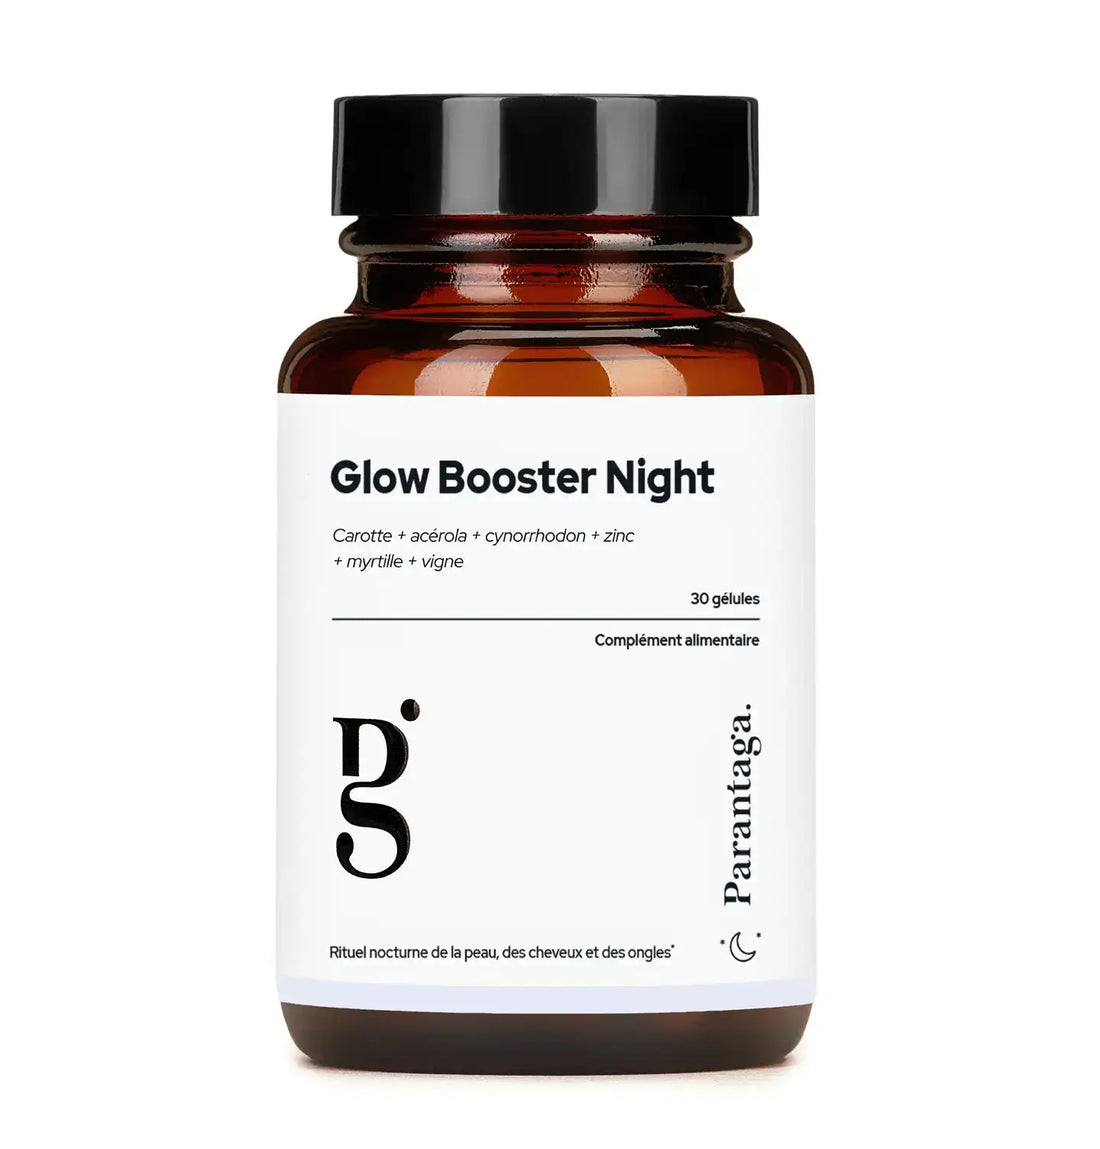 Glow Booster Night